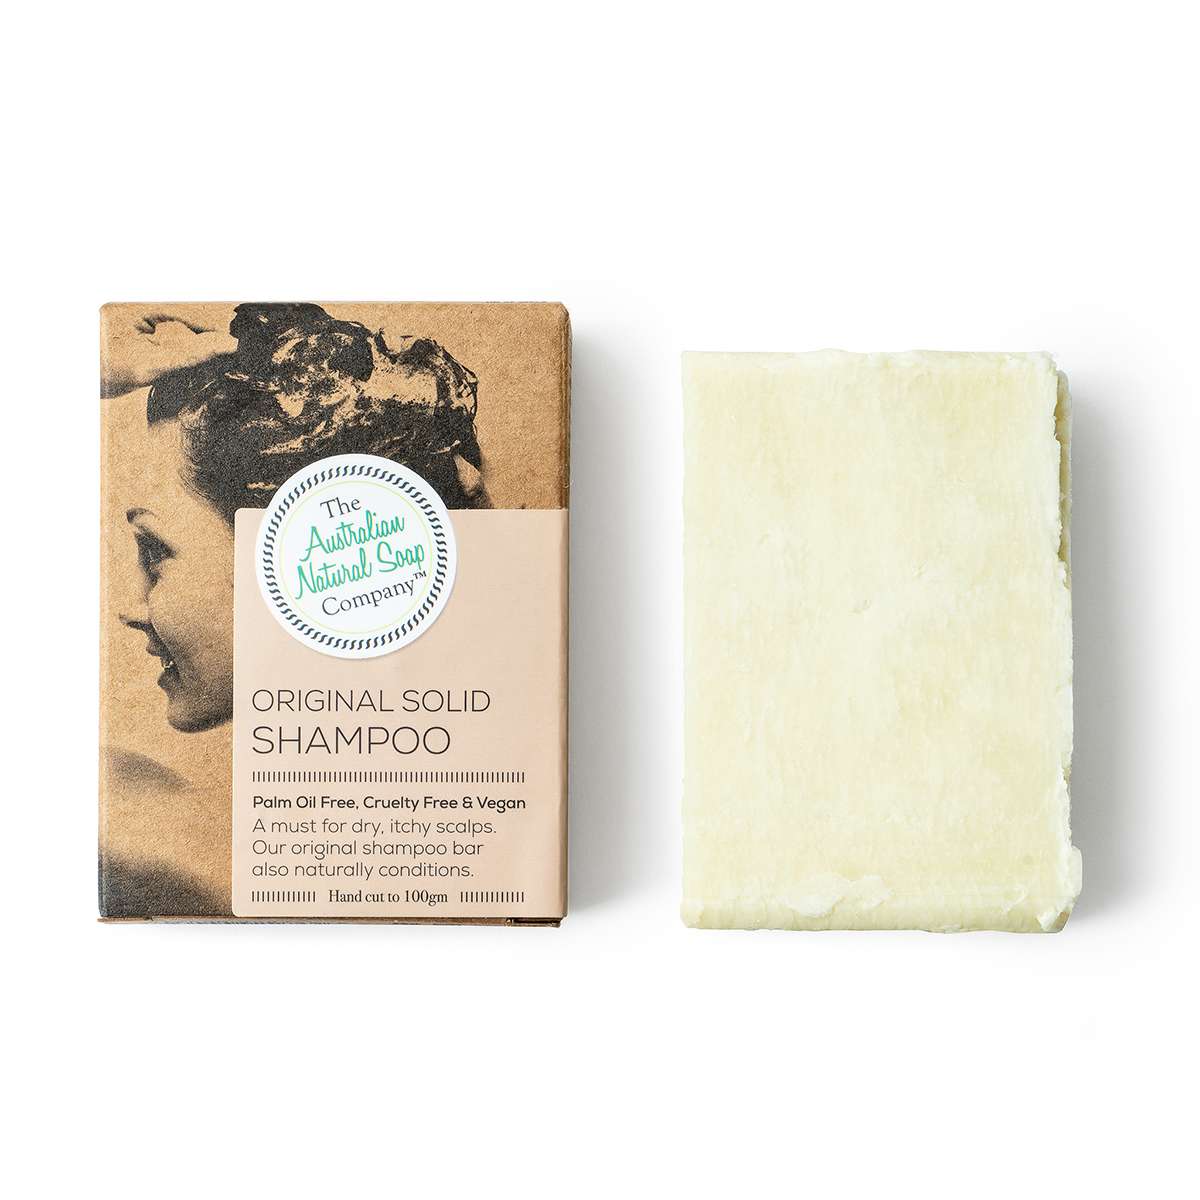 A box and bar of Australia natural soap company OG solid shampoo